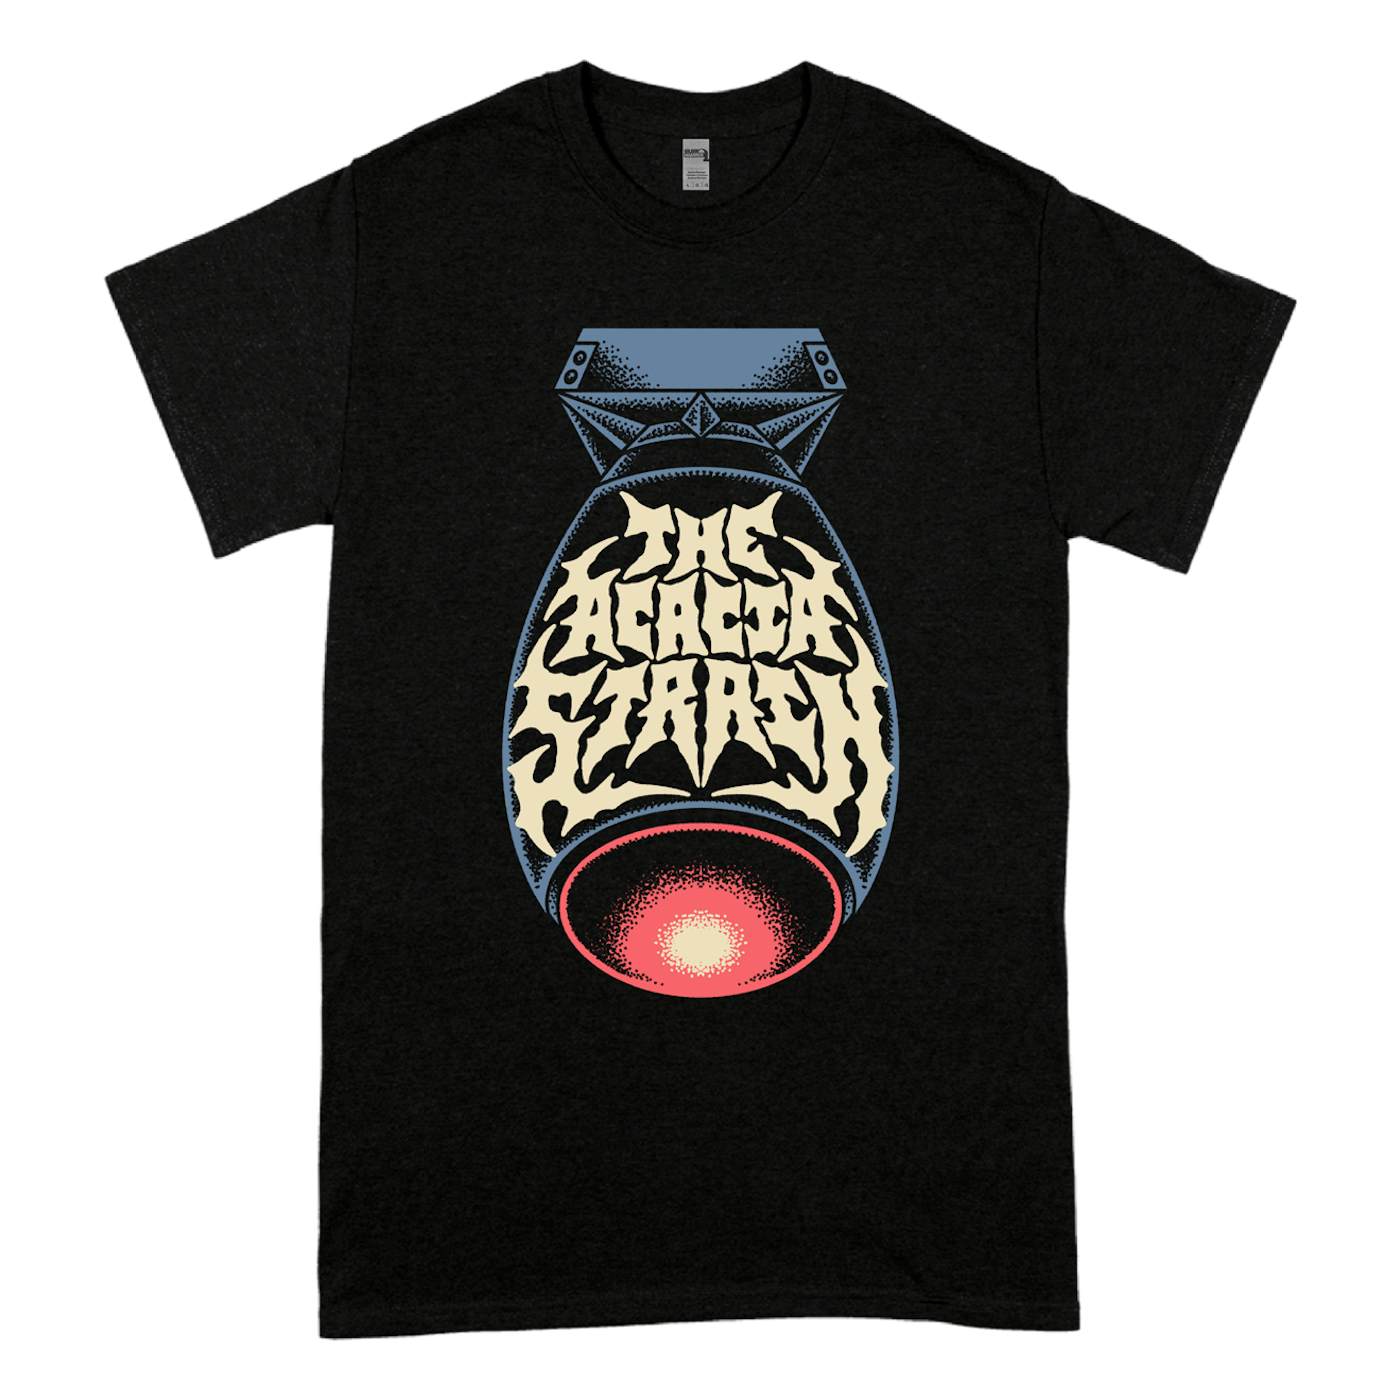 The Acacia Strain "War" T-Shirt